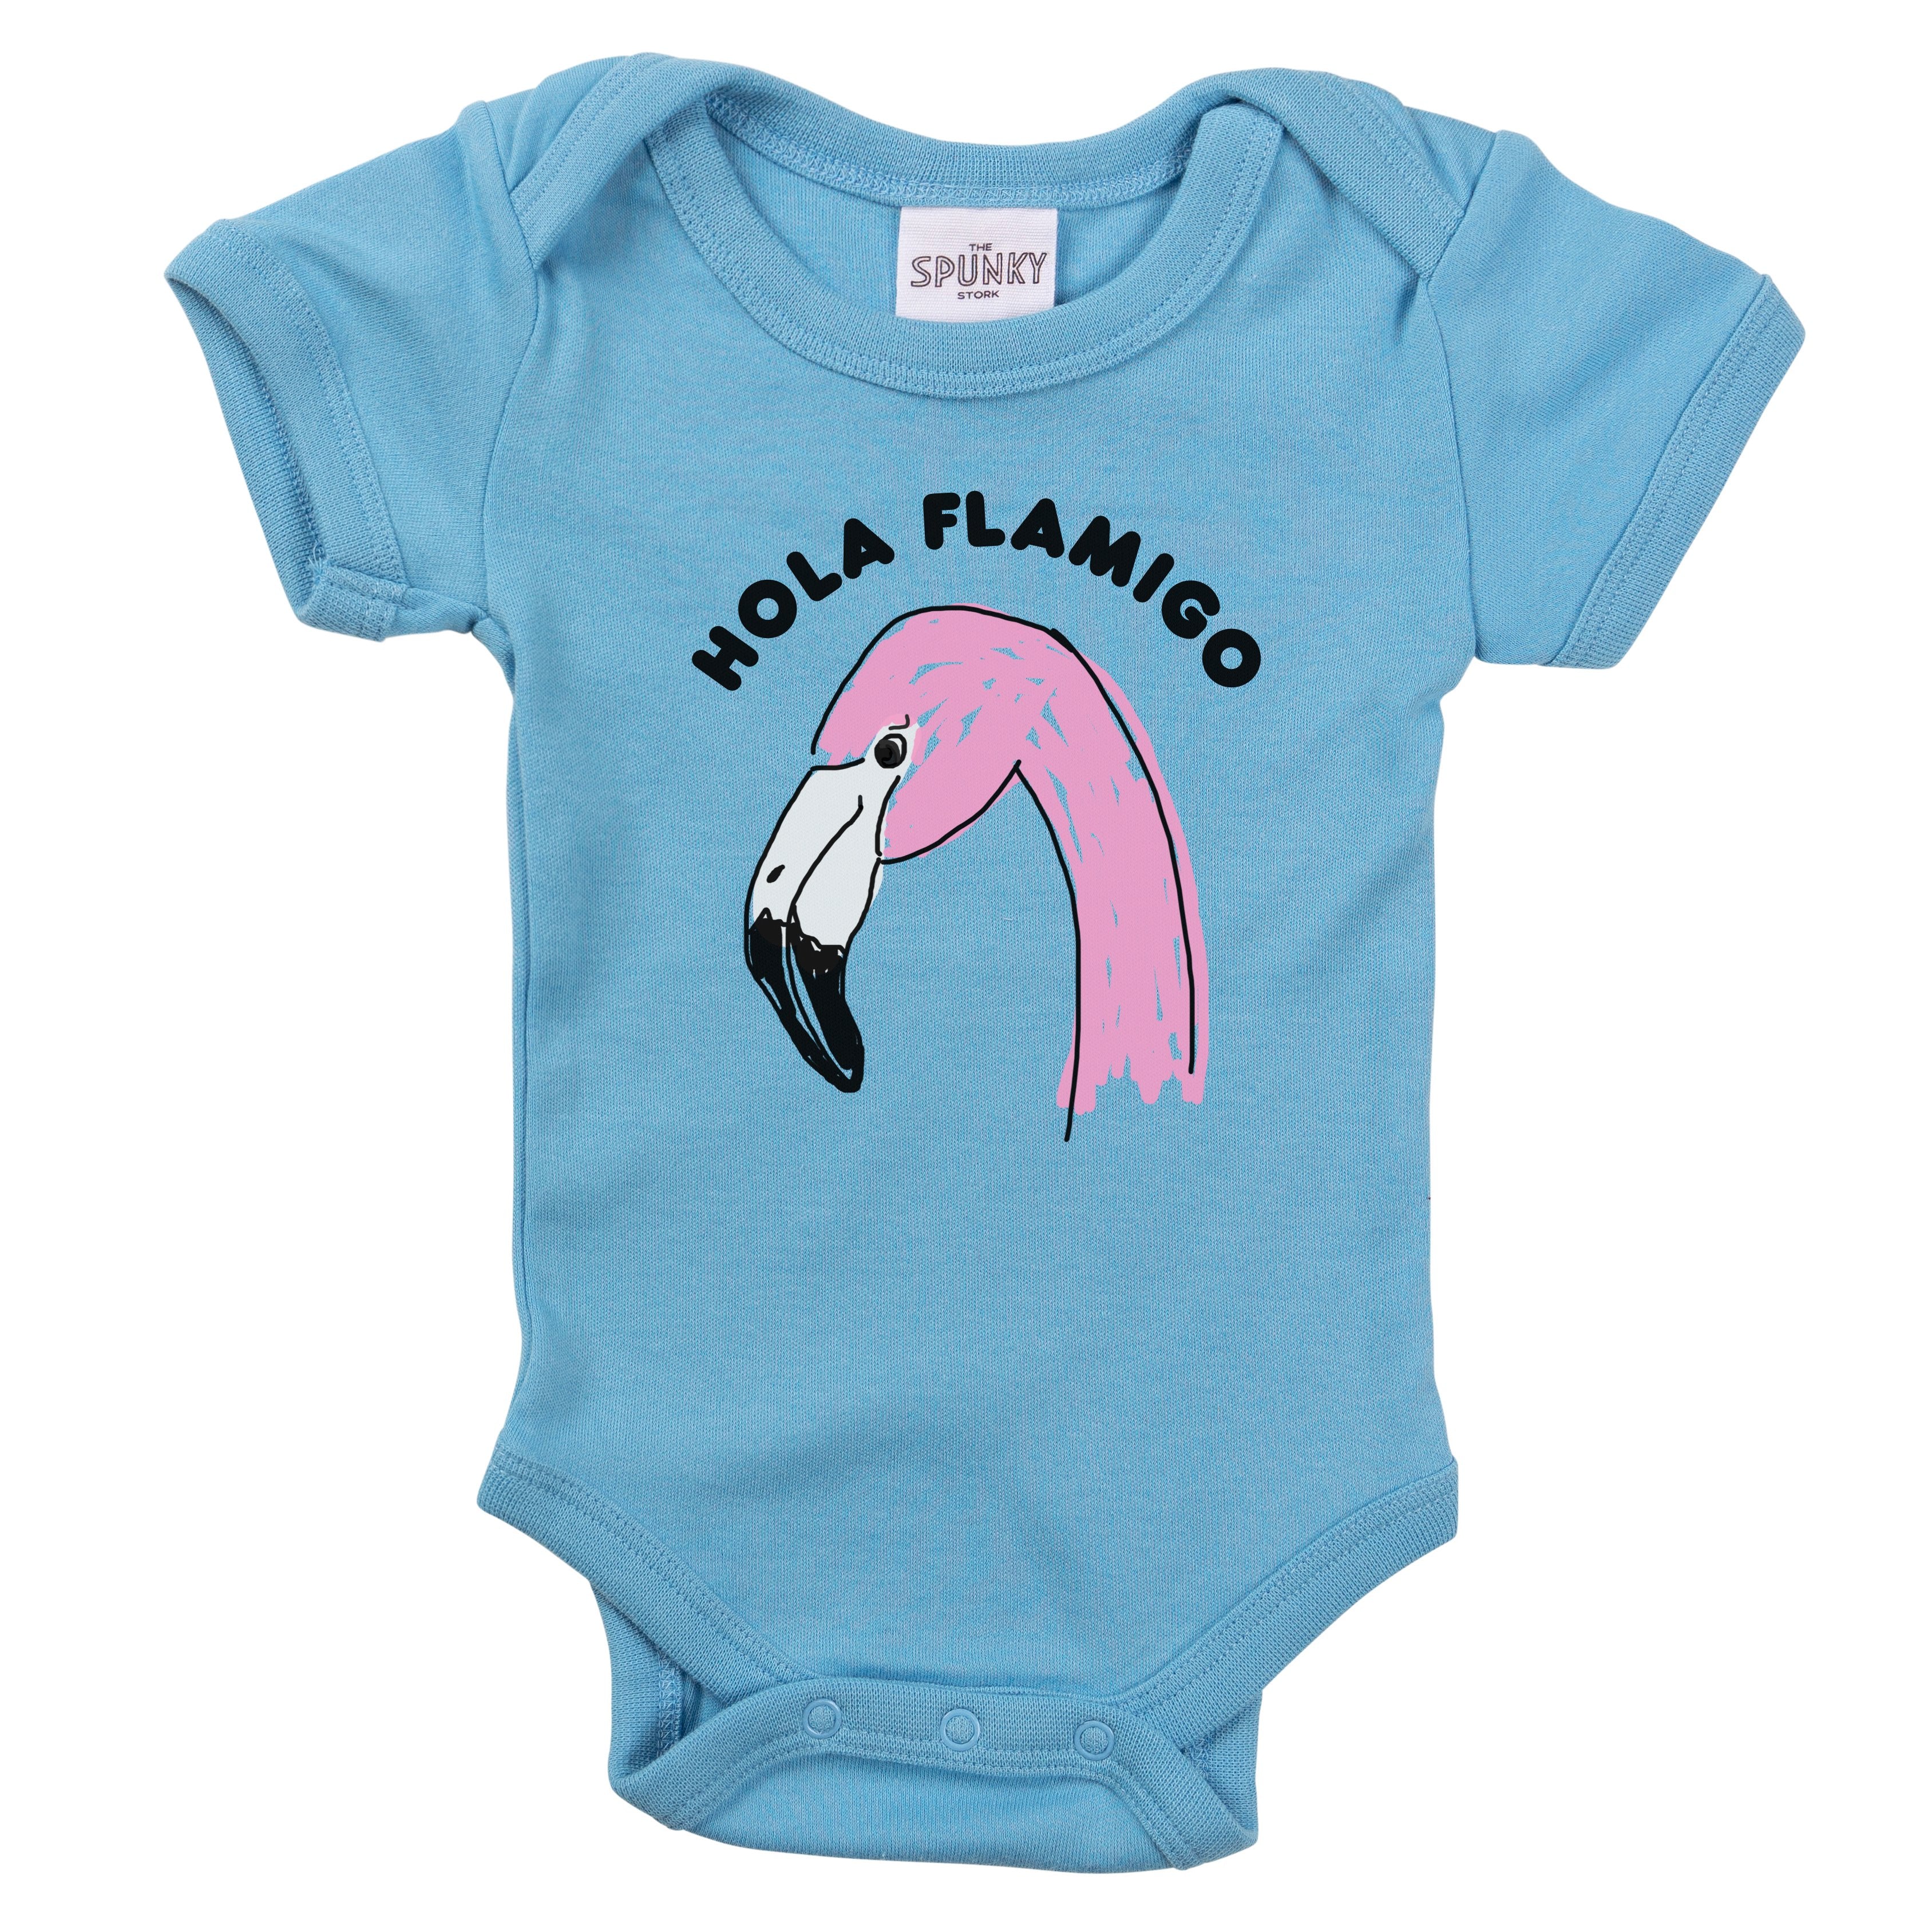 Izhansean Newborn Infant Baby Boys Gentleman Clothes Flamingos